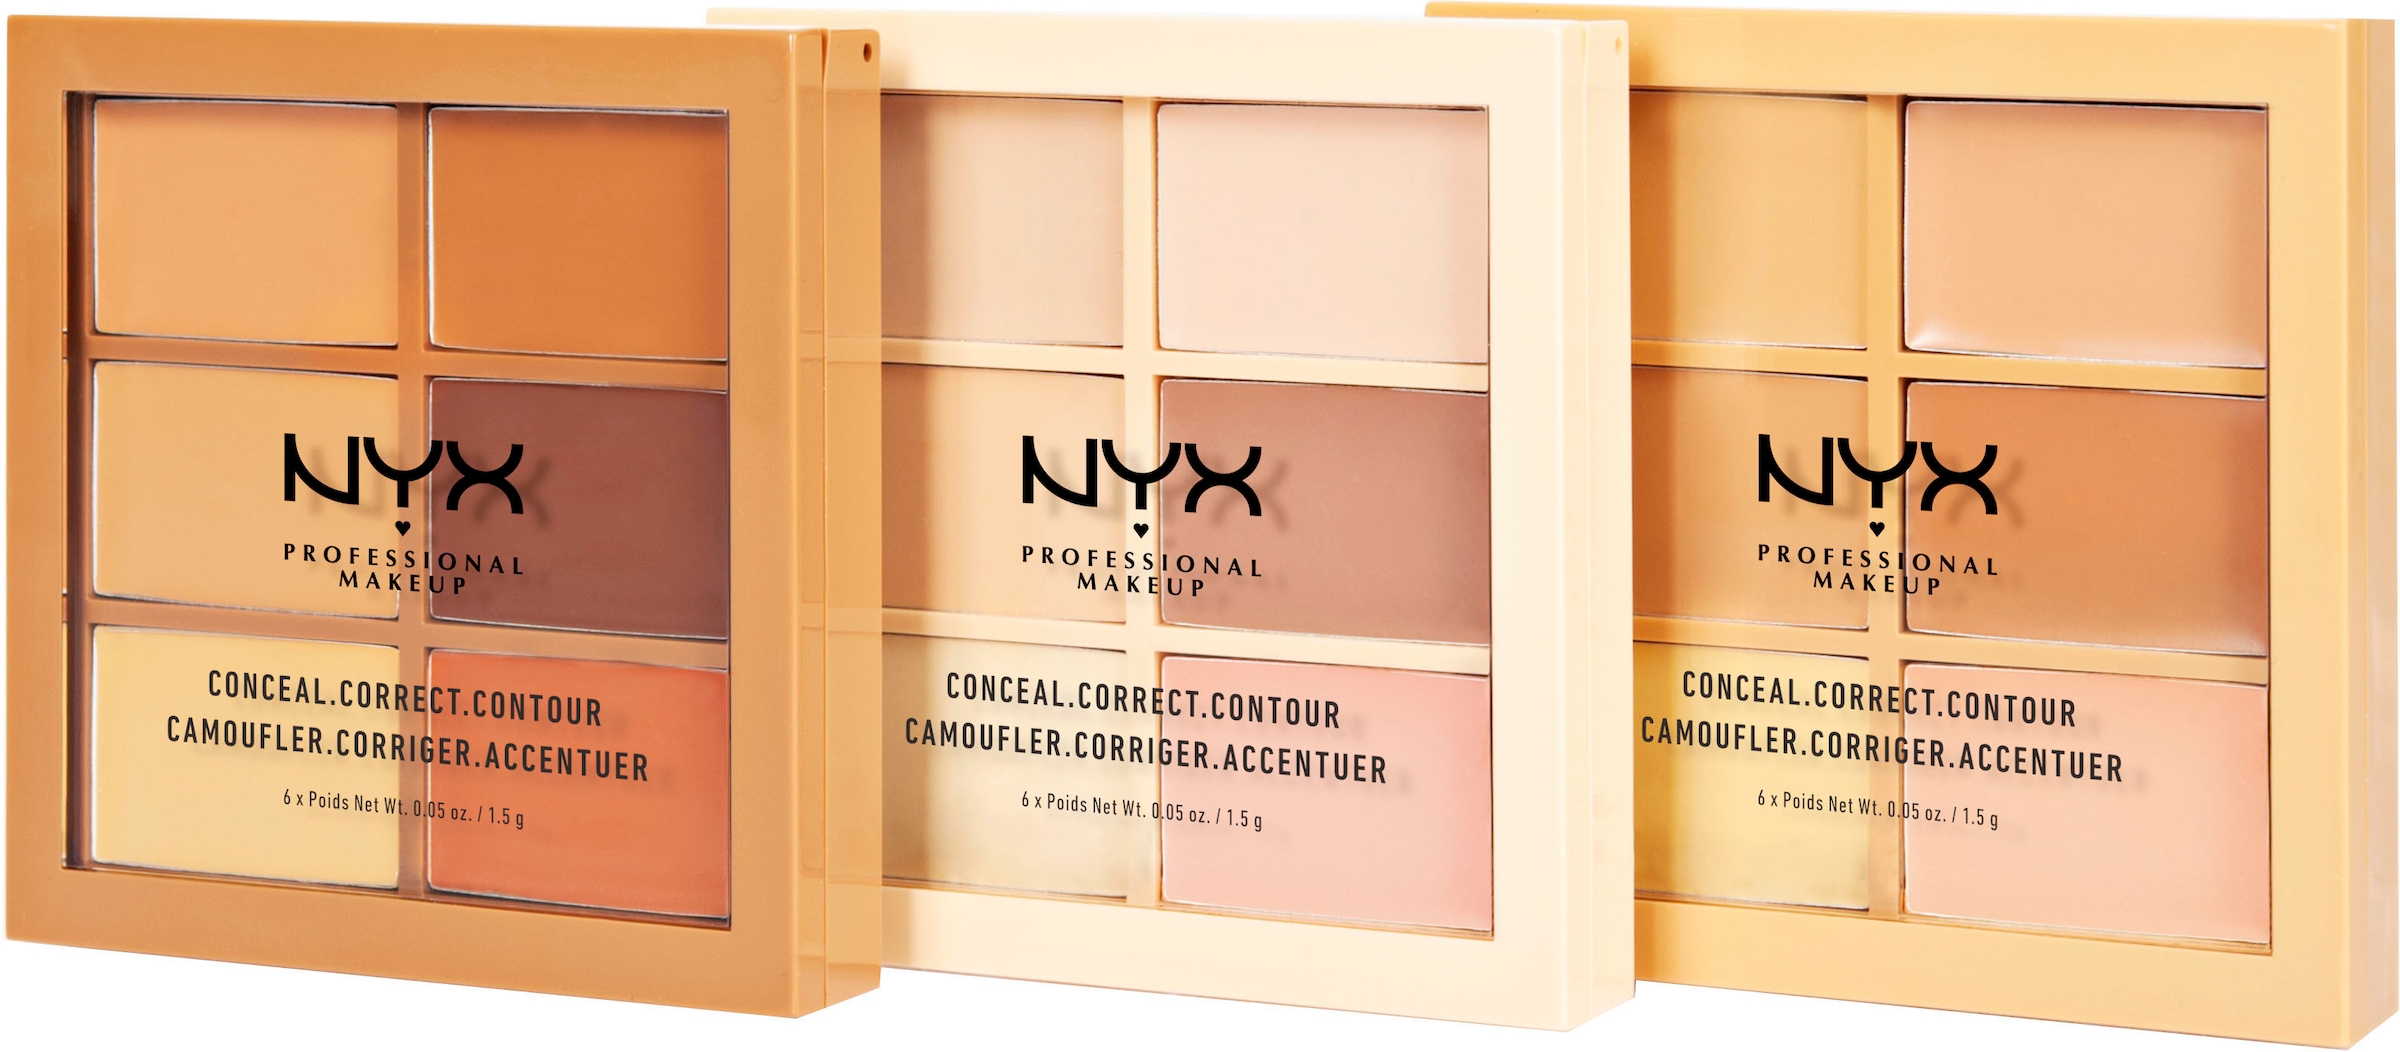 NYX Concealer »NYX Professional Makeup Palette« Color Correcting Online OTTO Shop im